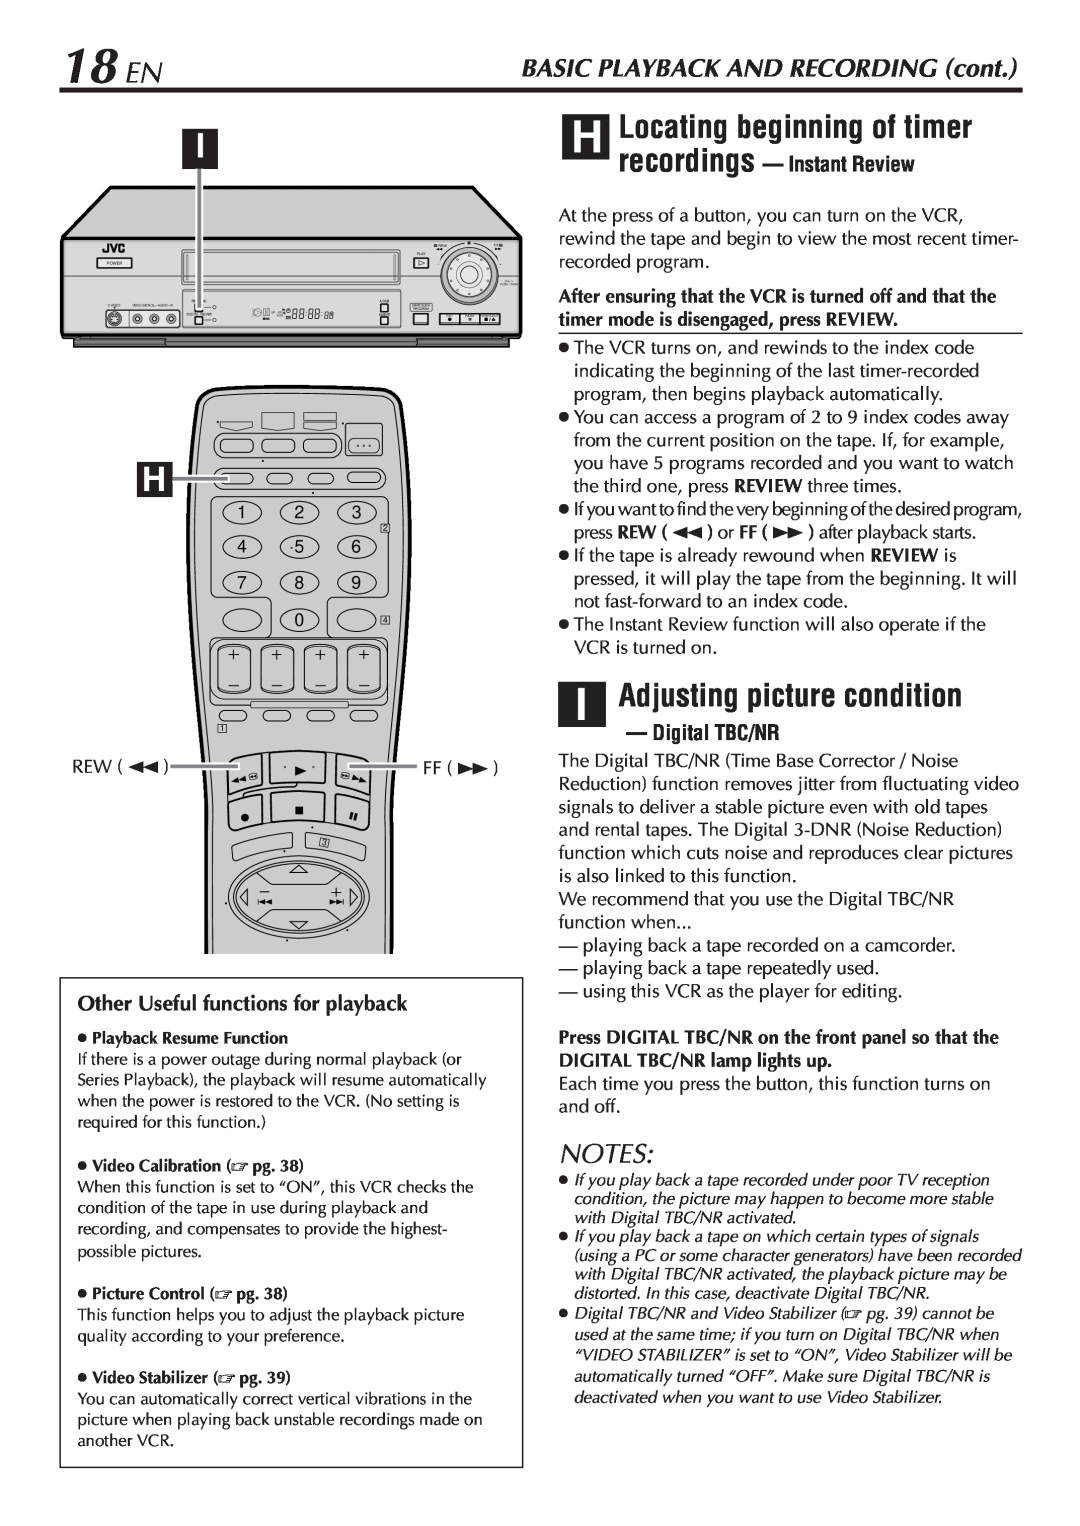 JVC SR-V10U manual 18 EN, H Locating beginning of timer, I Adjusting picture condition, recordings - Instant Review 